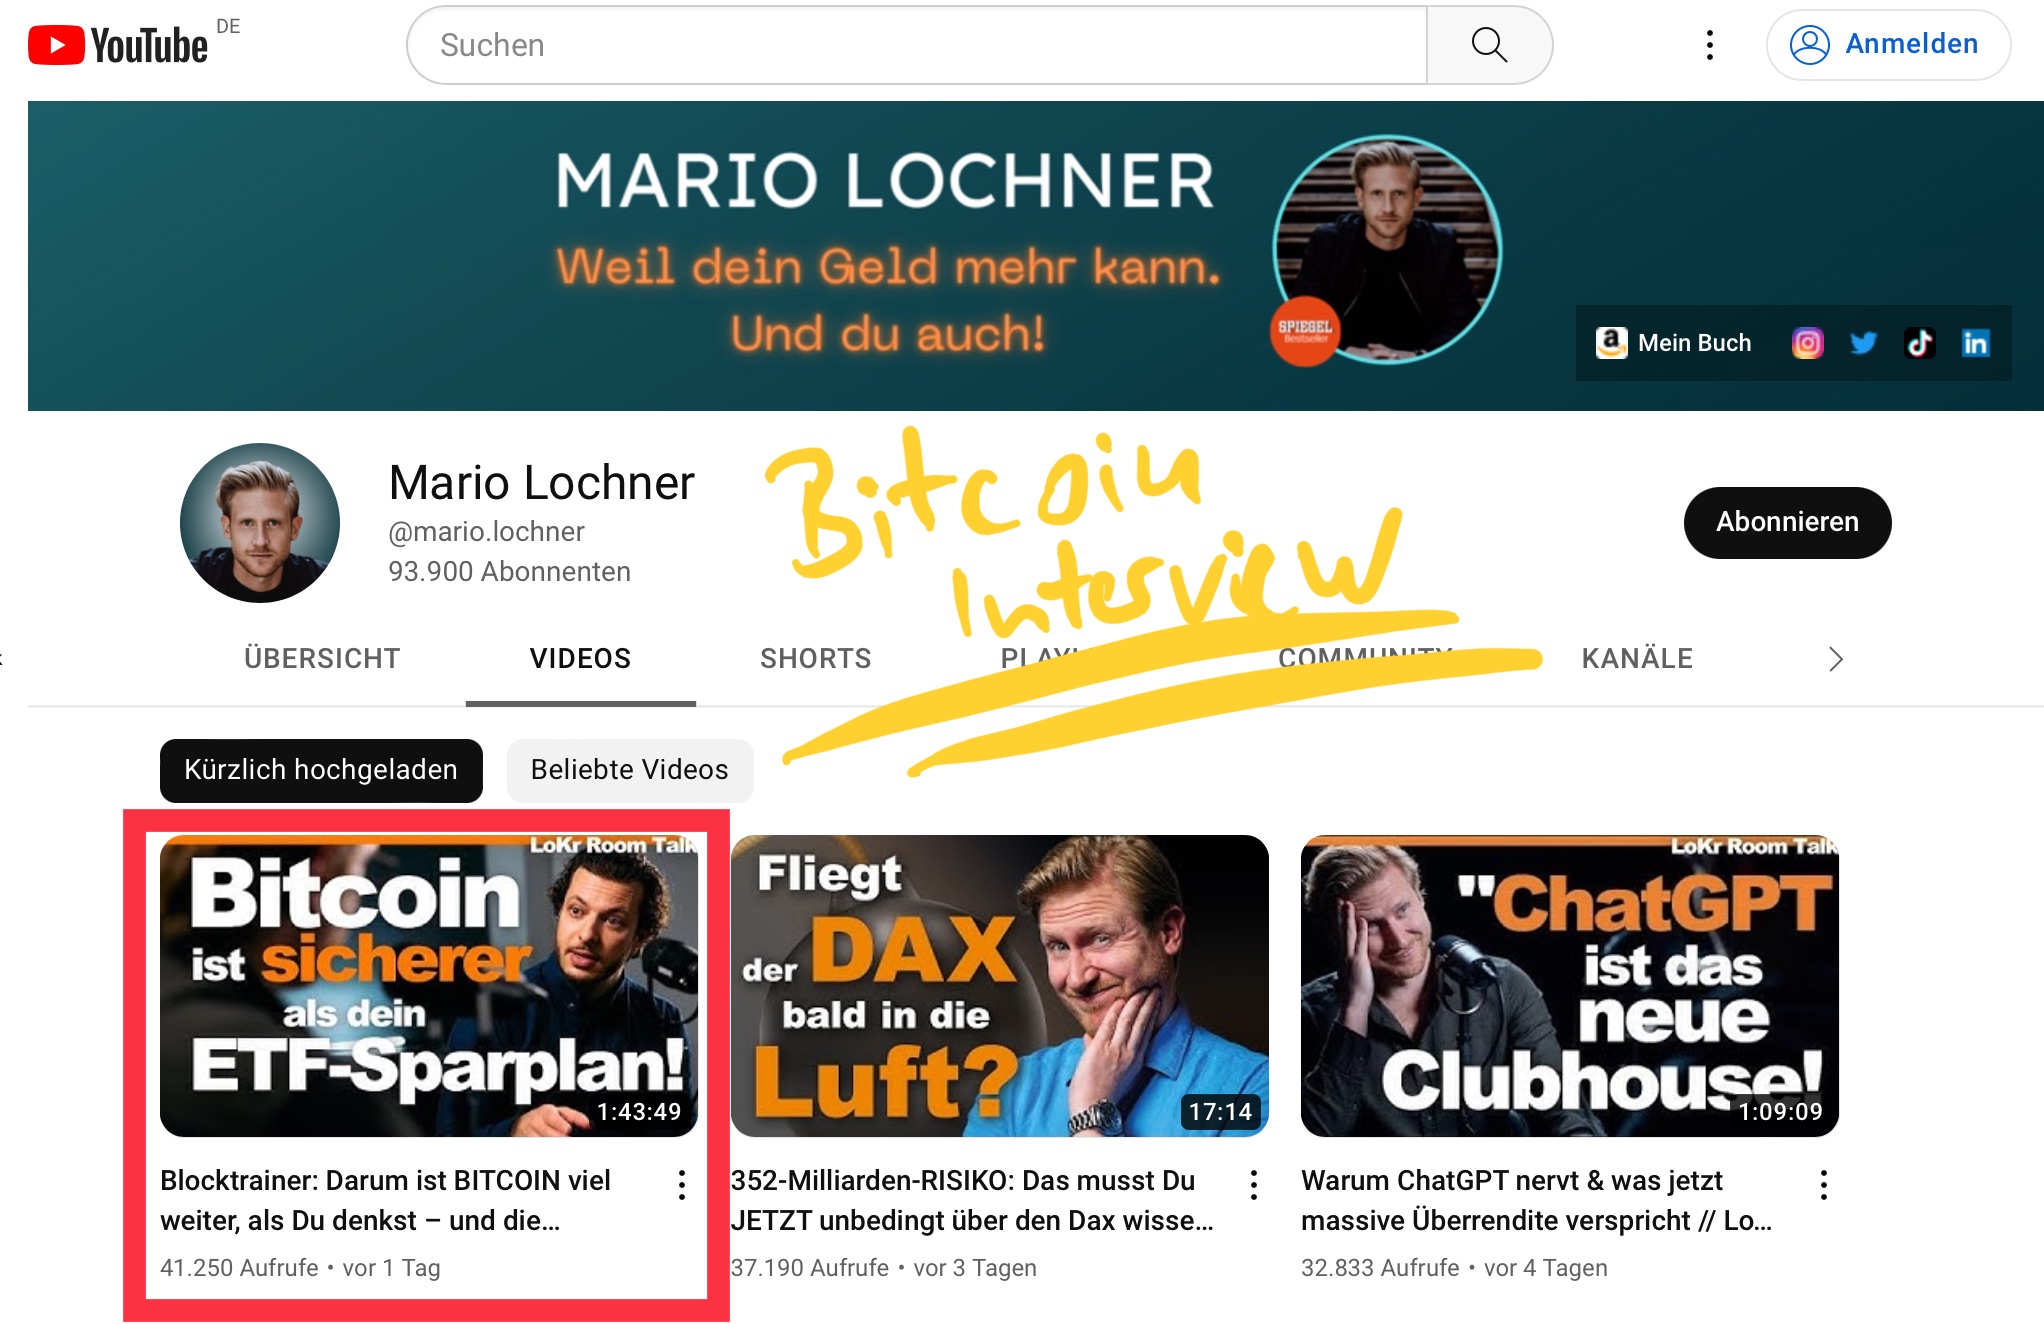 @borsengelaber/herausragendes-interview-zu-bitcoin-gereng